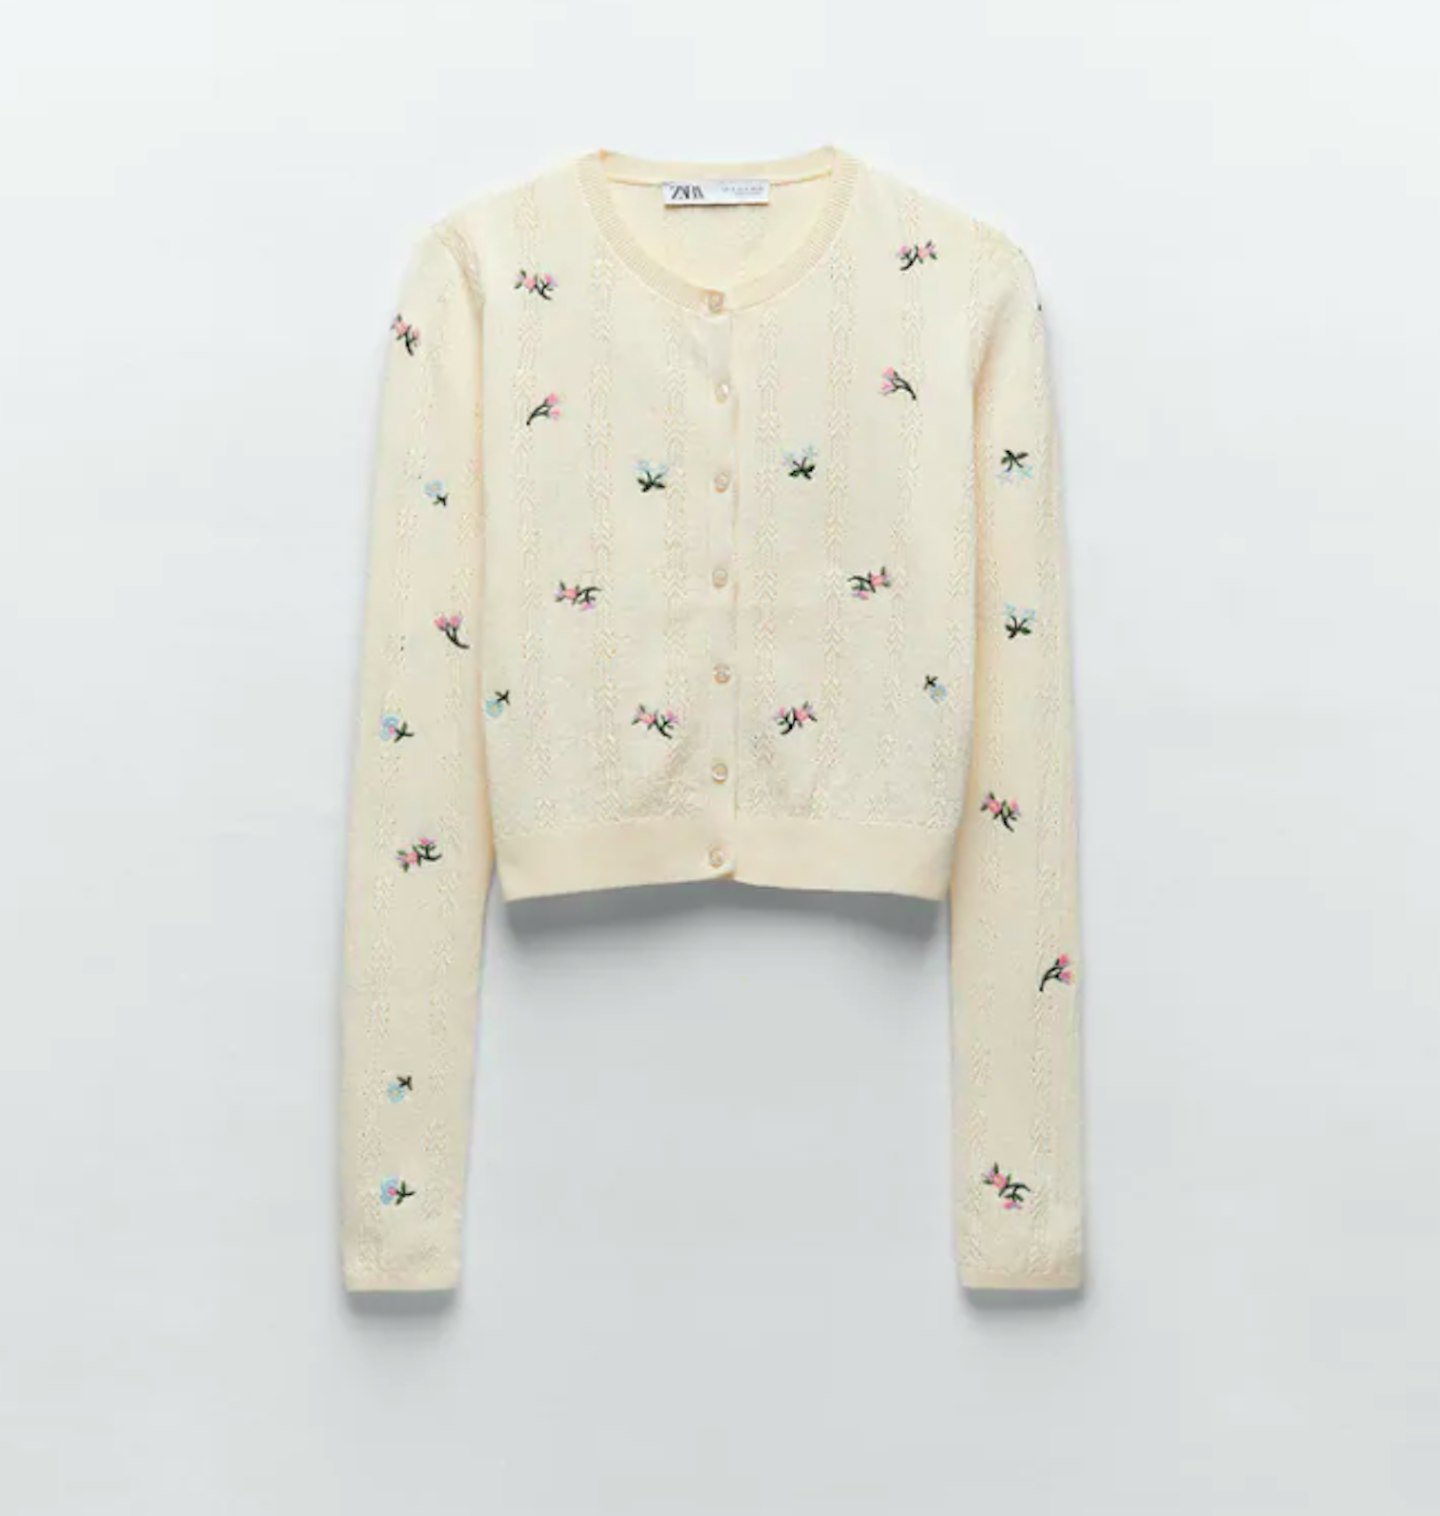 Zara, Knit Cardigan With Embroidery, £29.99